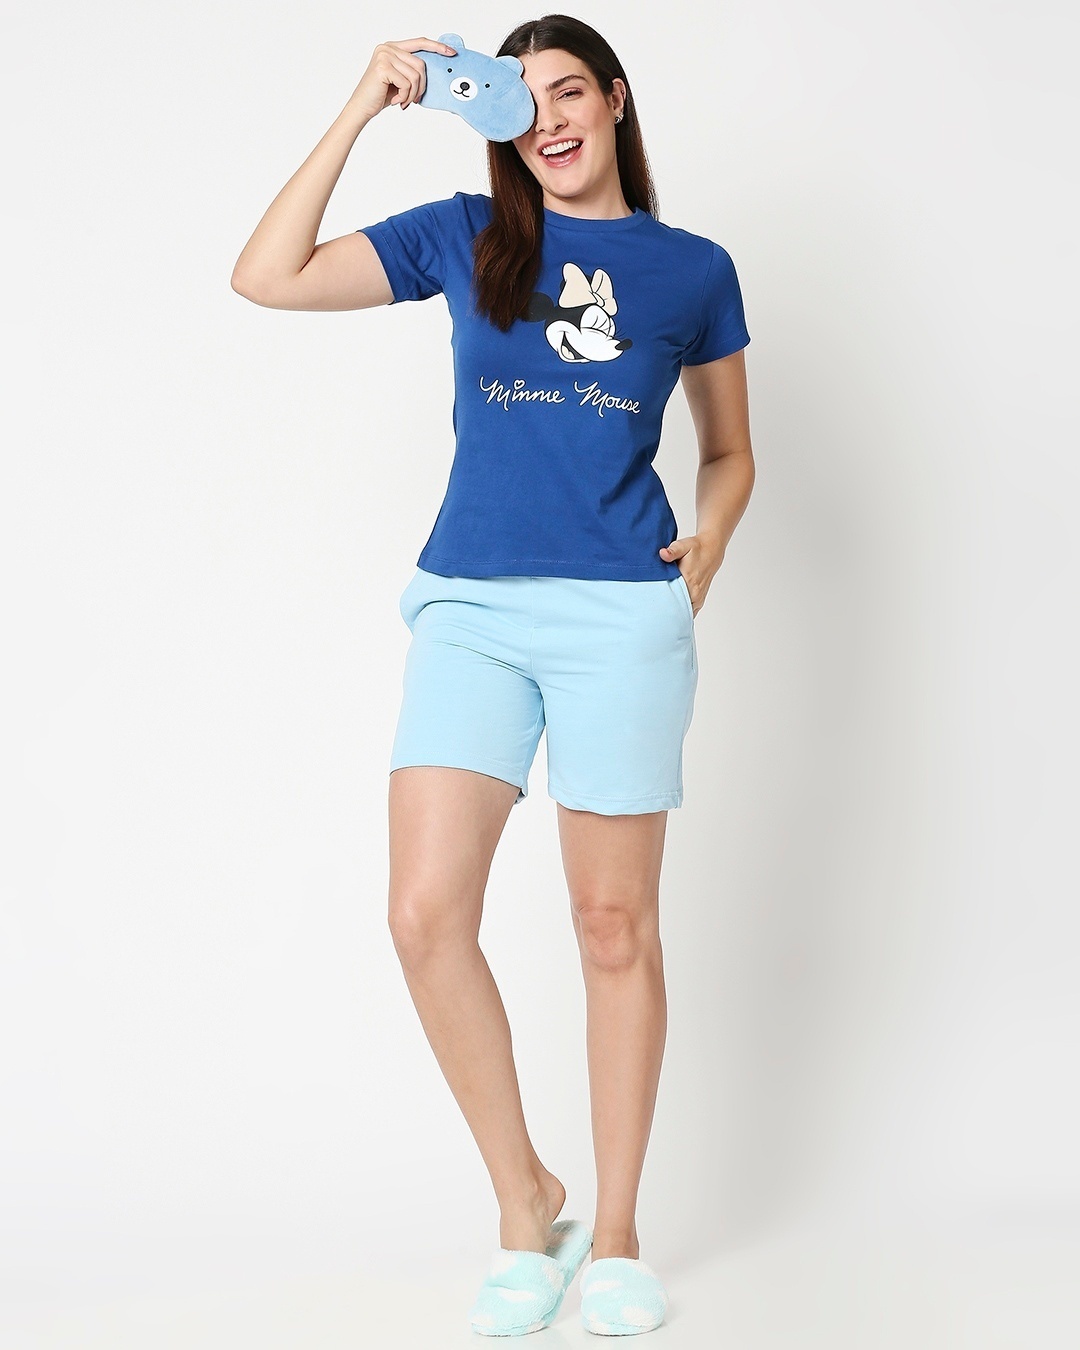 Shop Minnie Blue Half sleeve T-Shirt (DL)